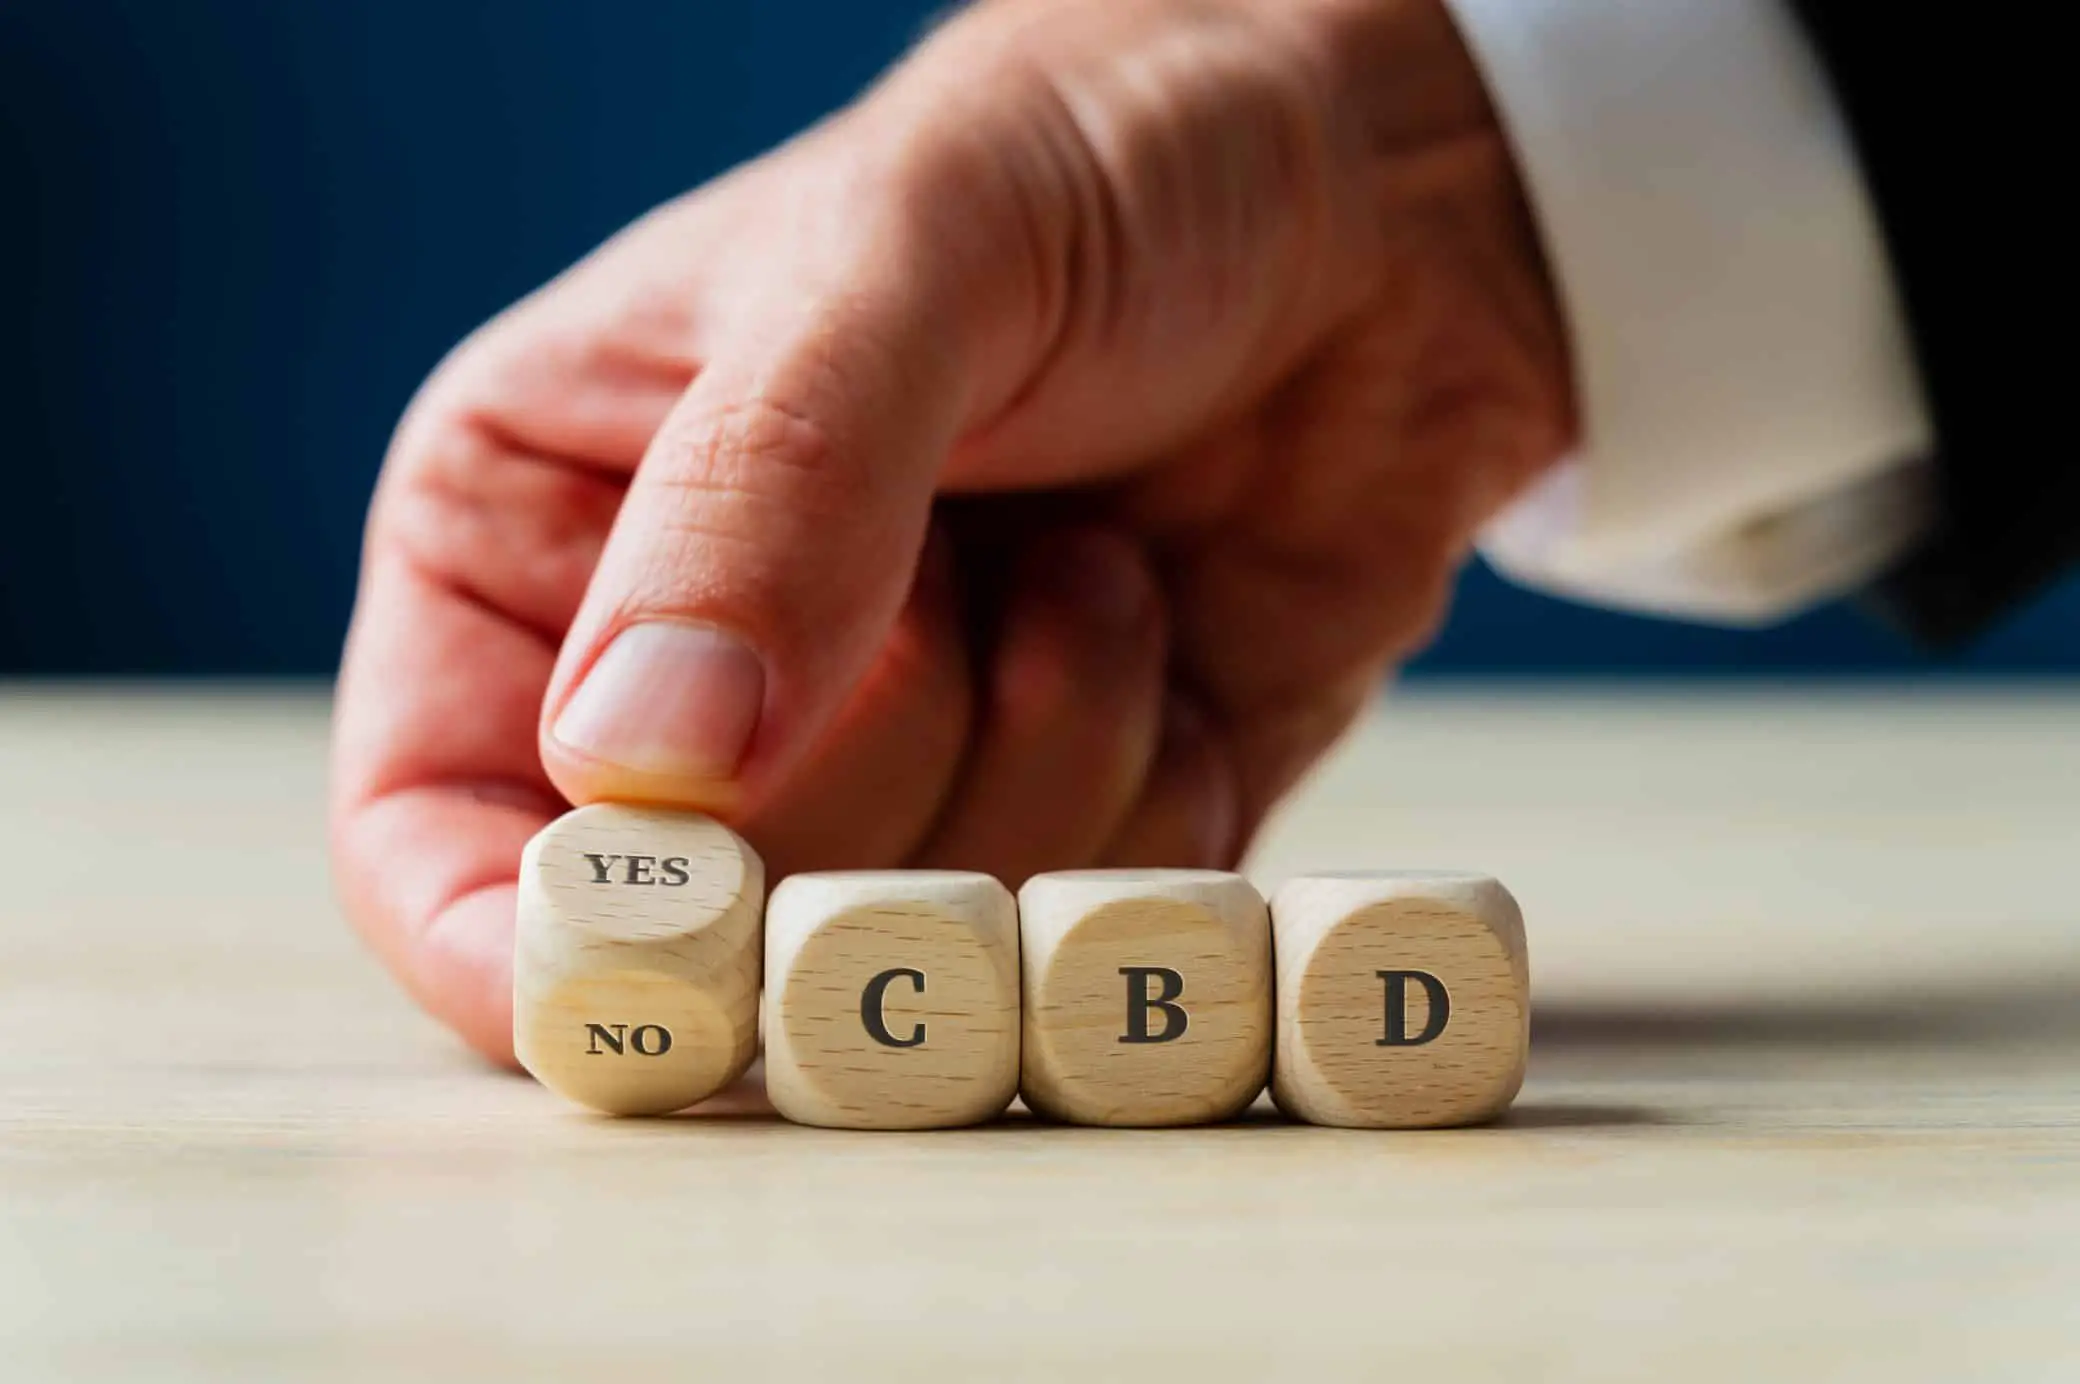 Cbd Legalization And Use